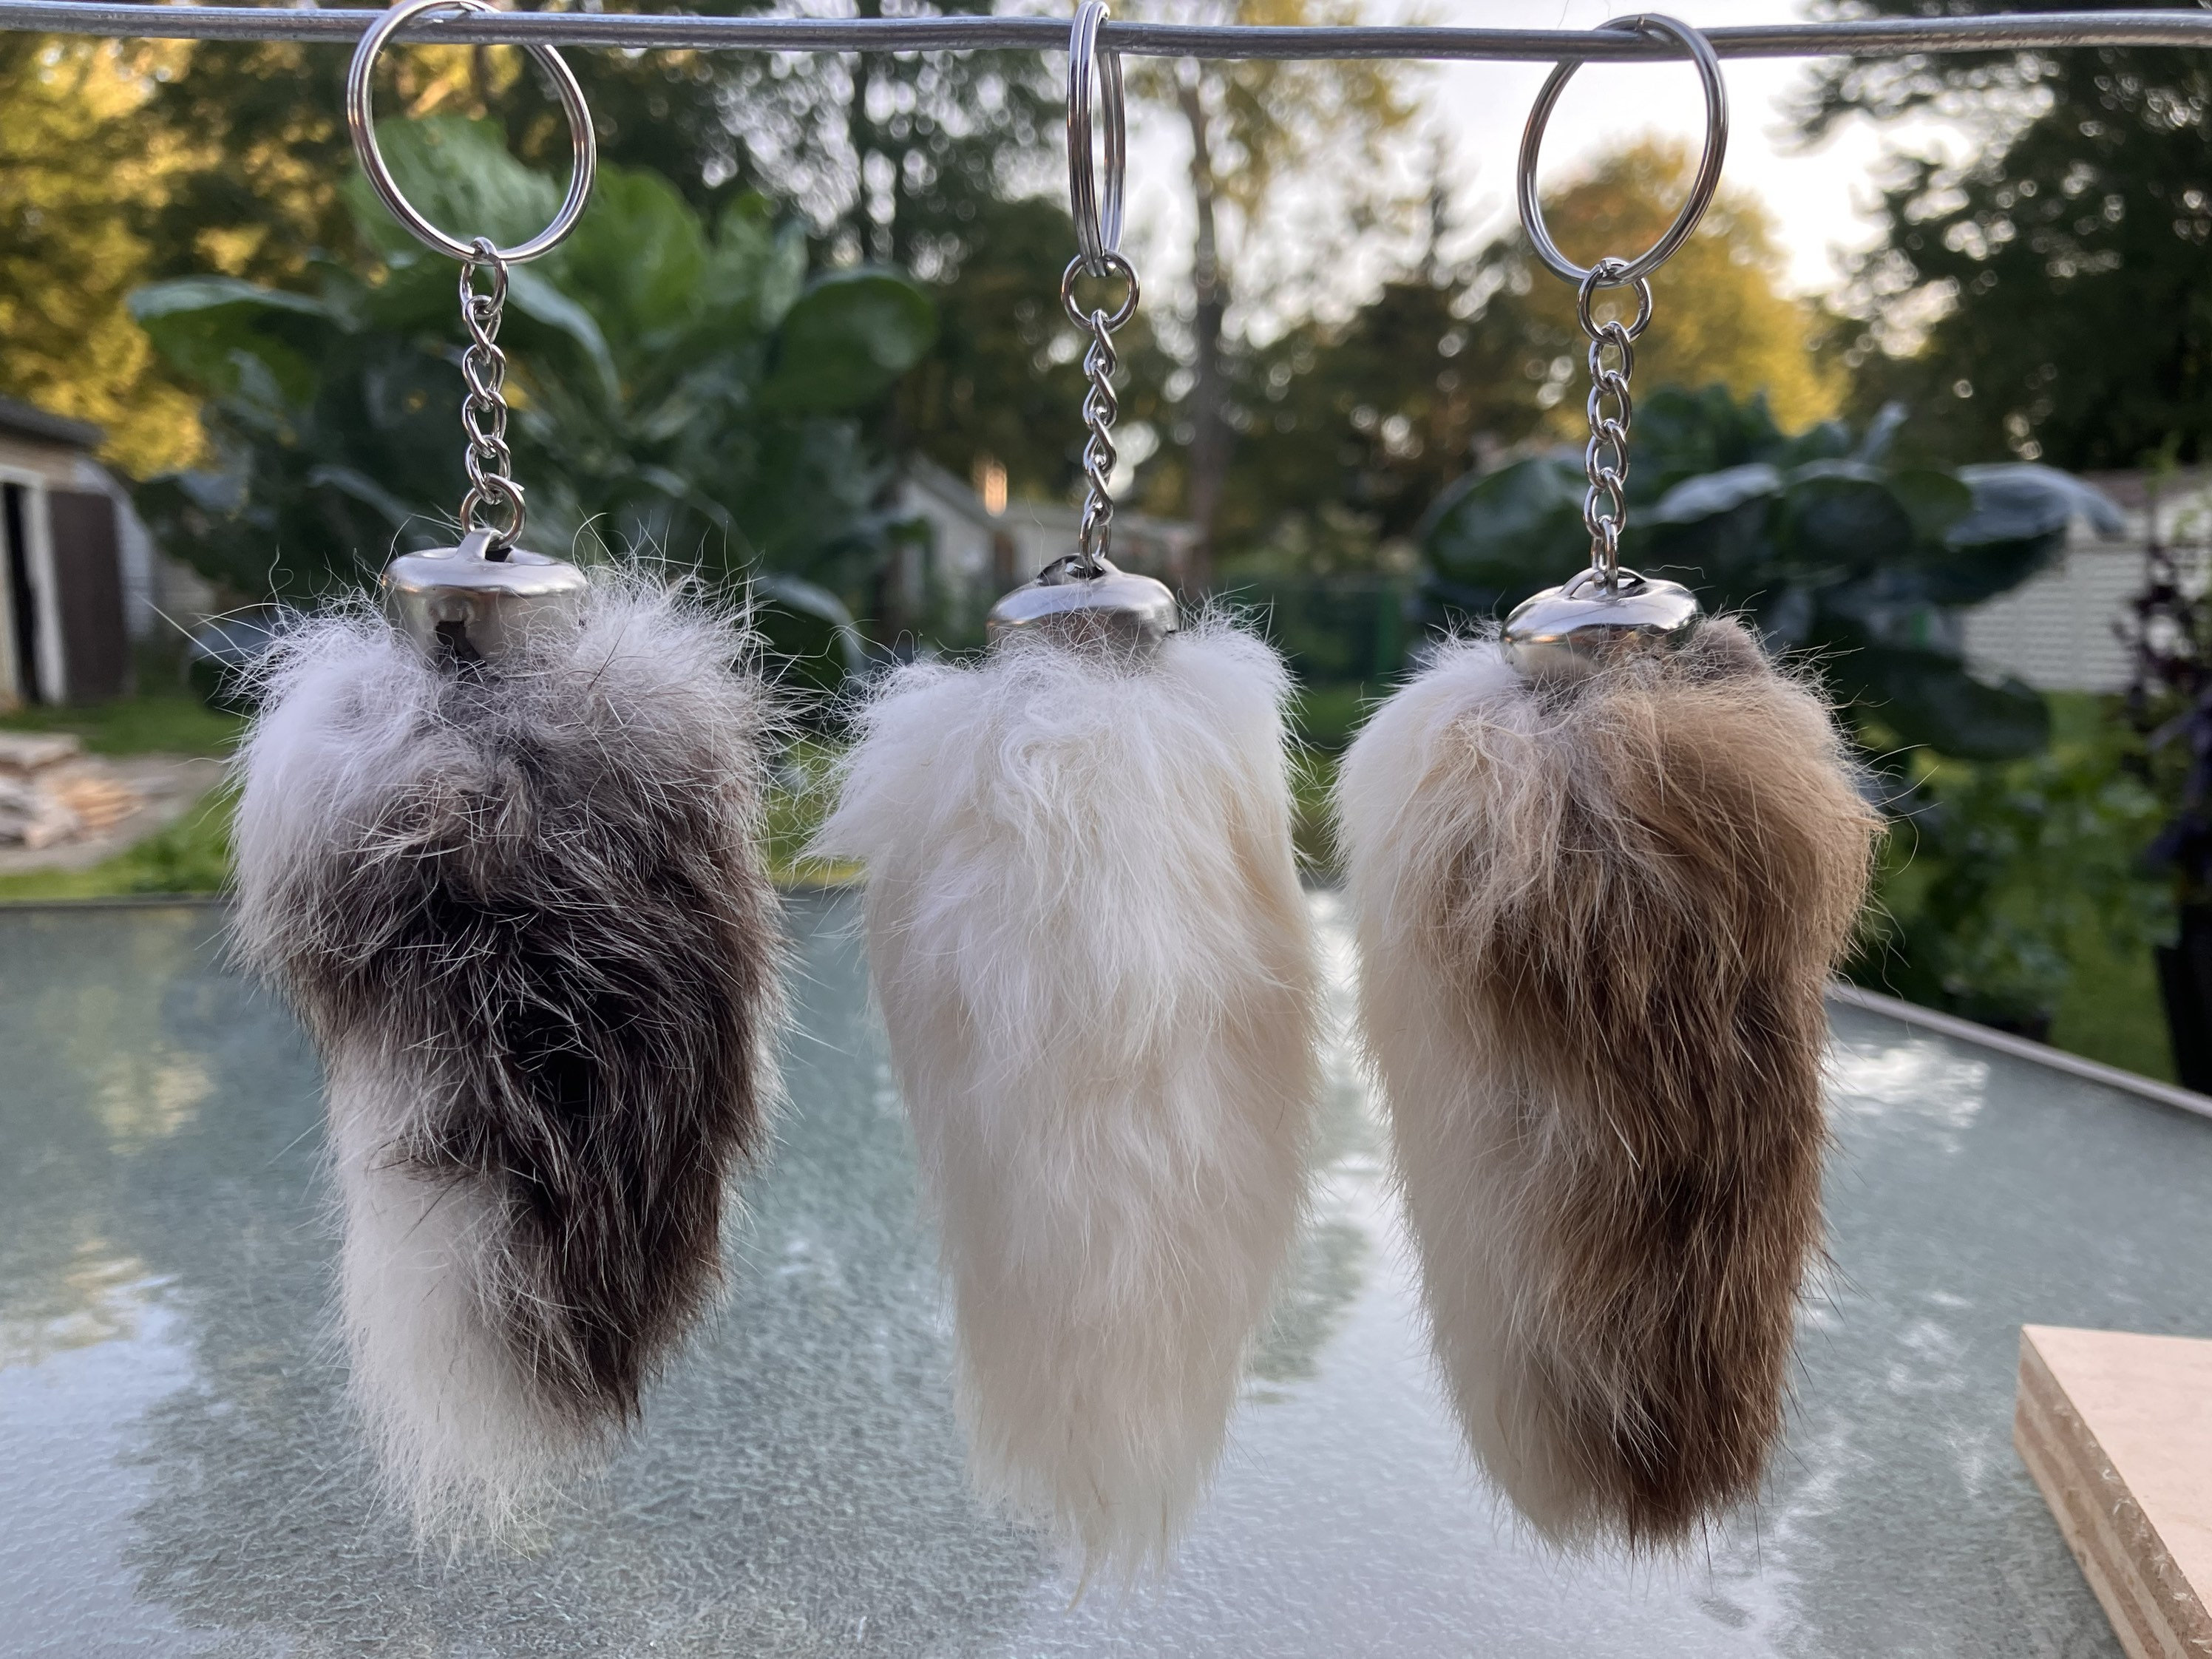 12 Cm Rabbit Ears Fur Ball Bag Charms With Golden Keyring Pom Pom, Fluffy  Fur Ball Keychain For Car Keyring, Charm Gift